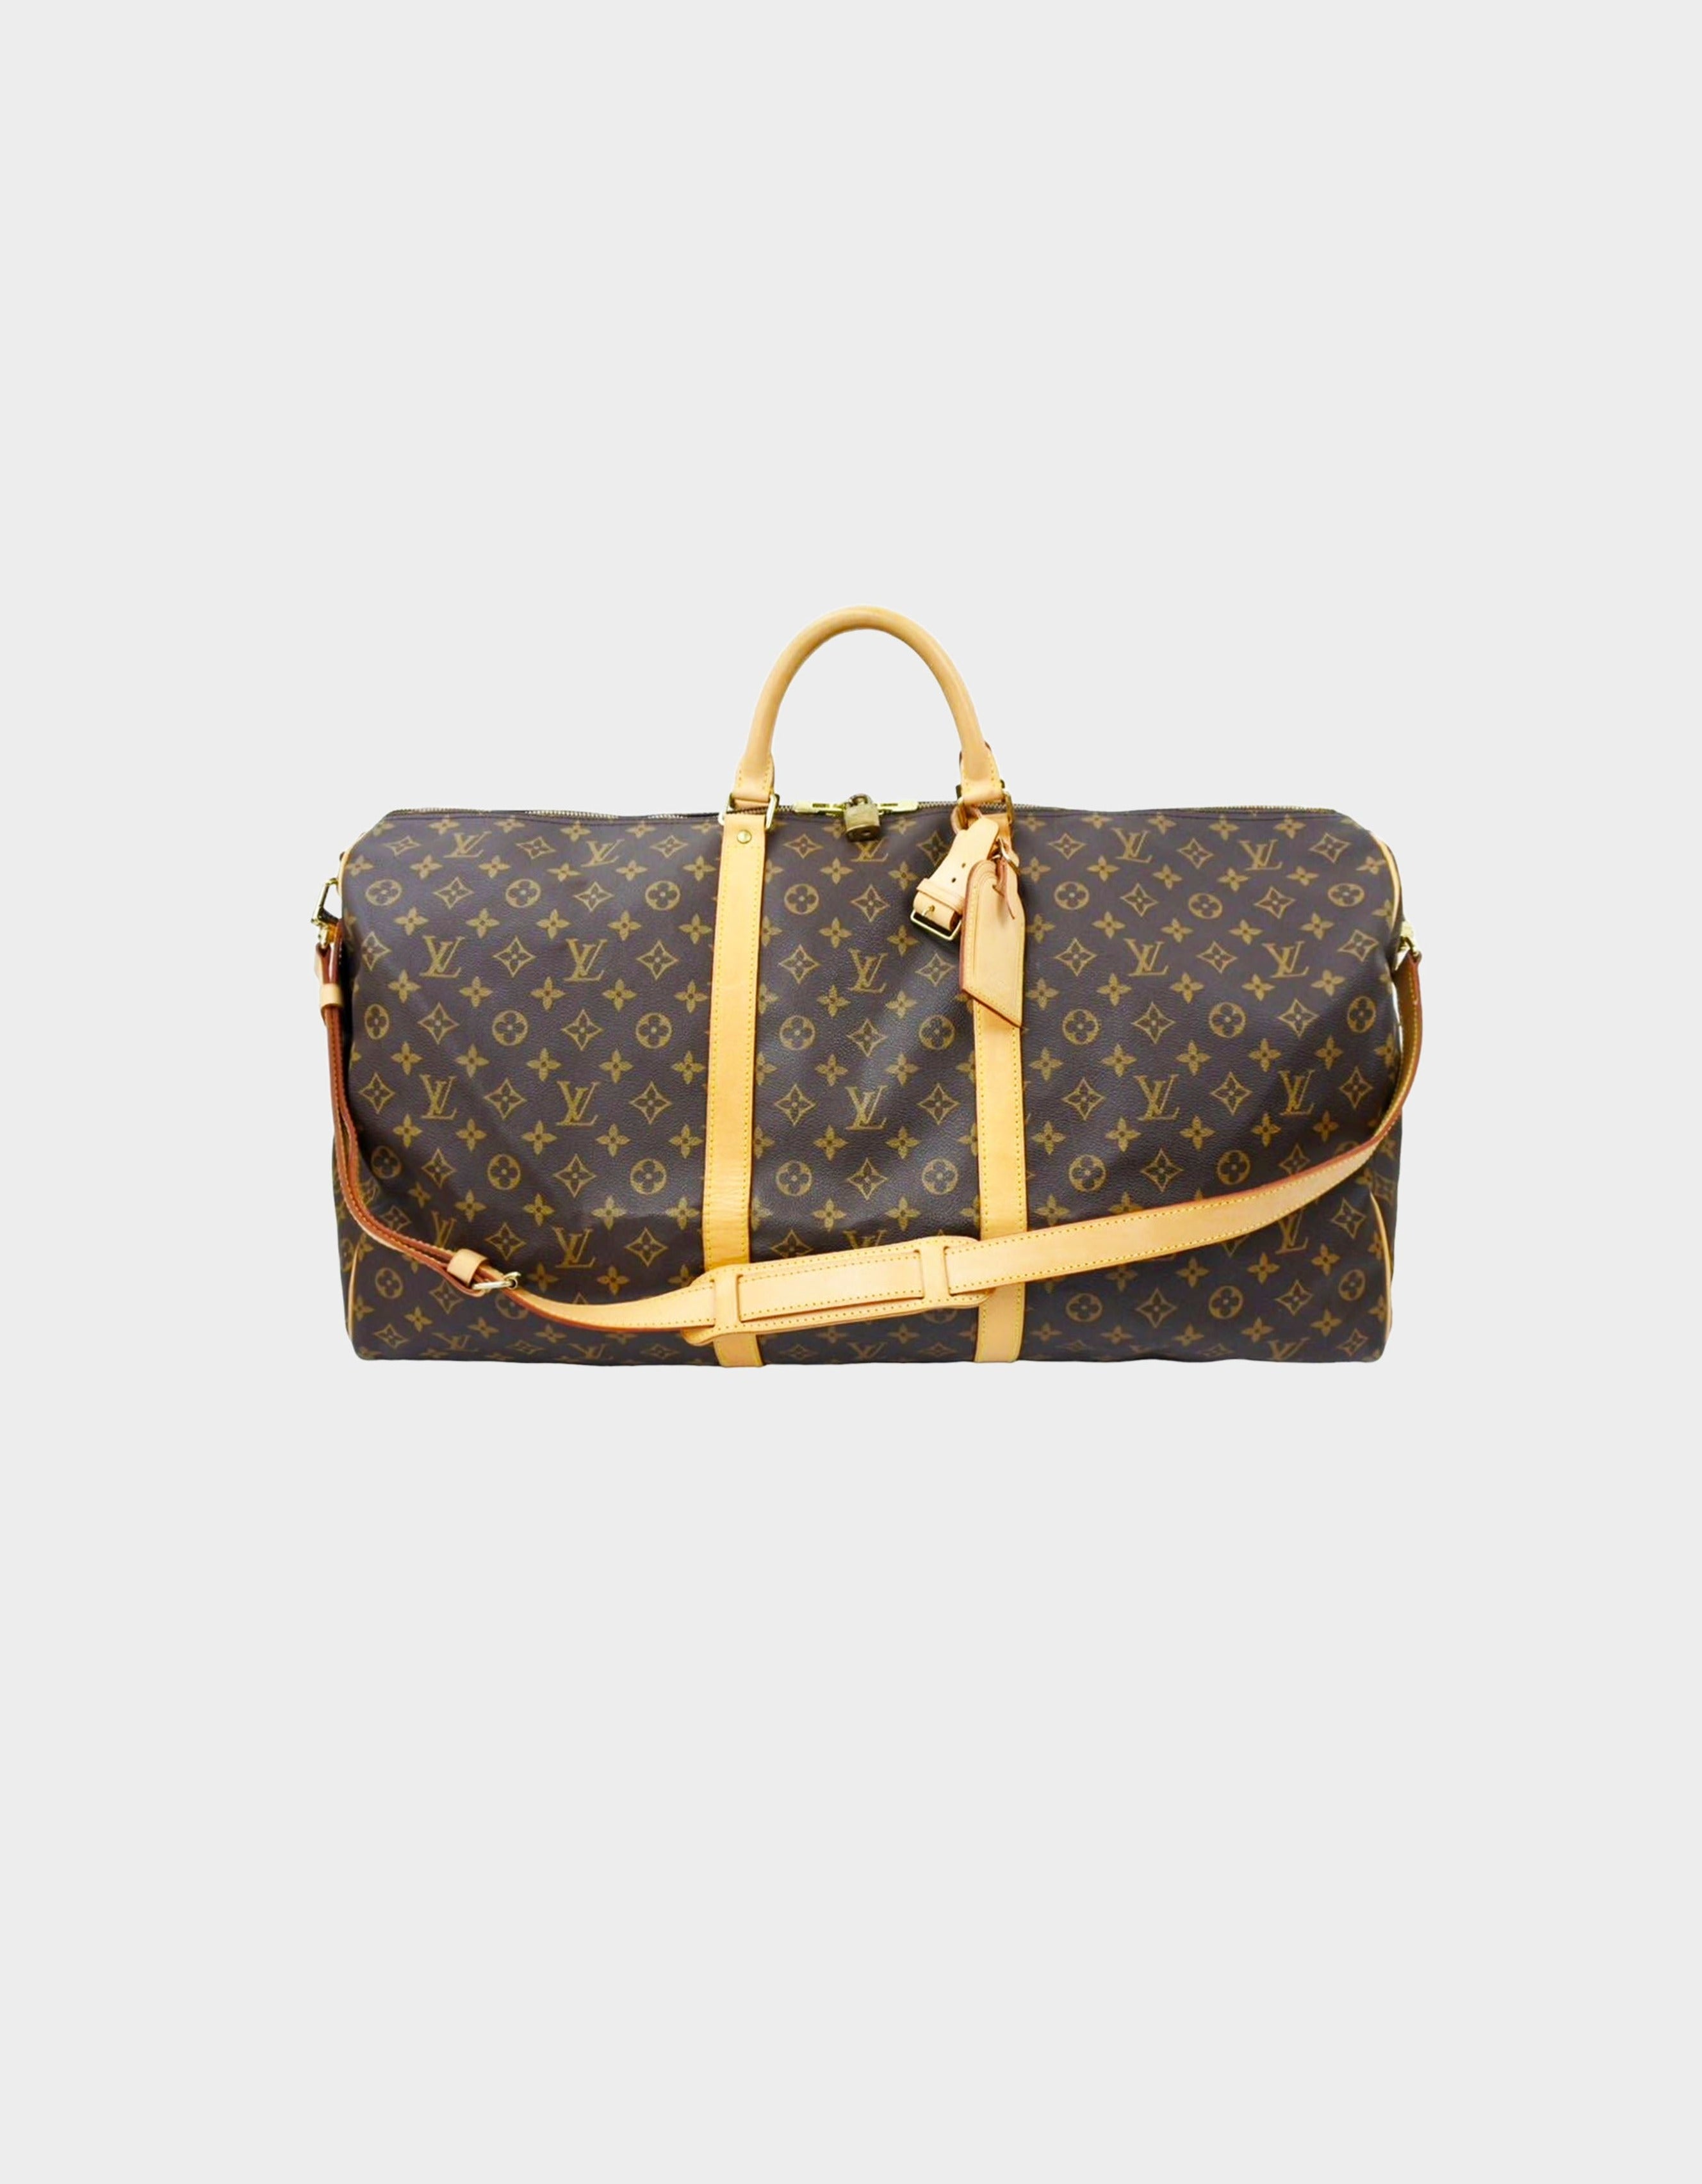 Louis Vuitton Keepall 60 Duffle Bag